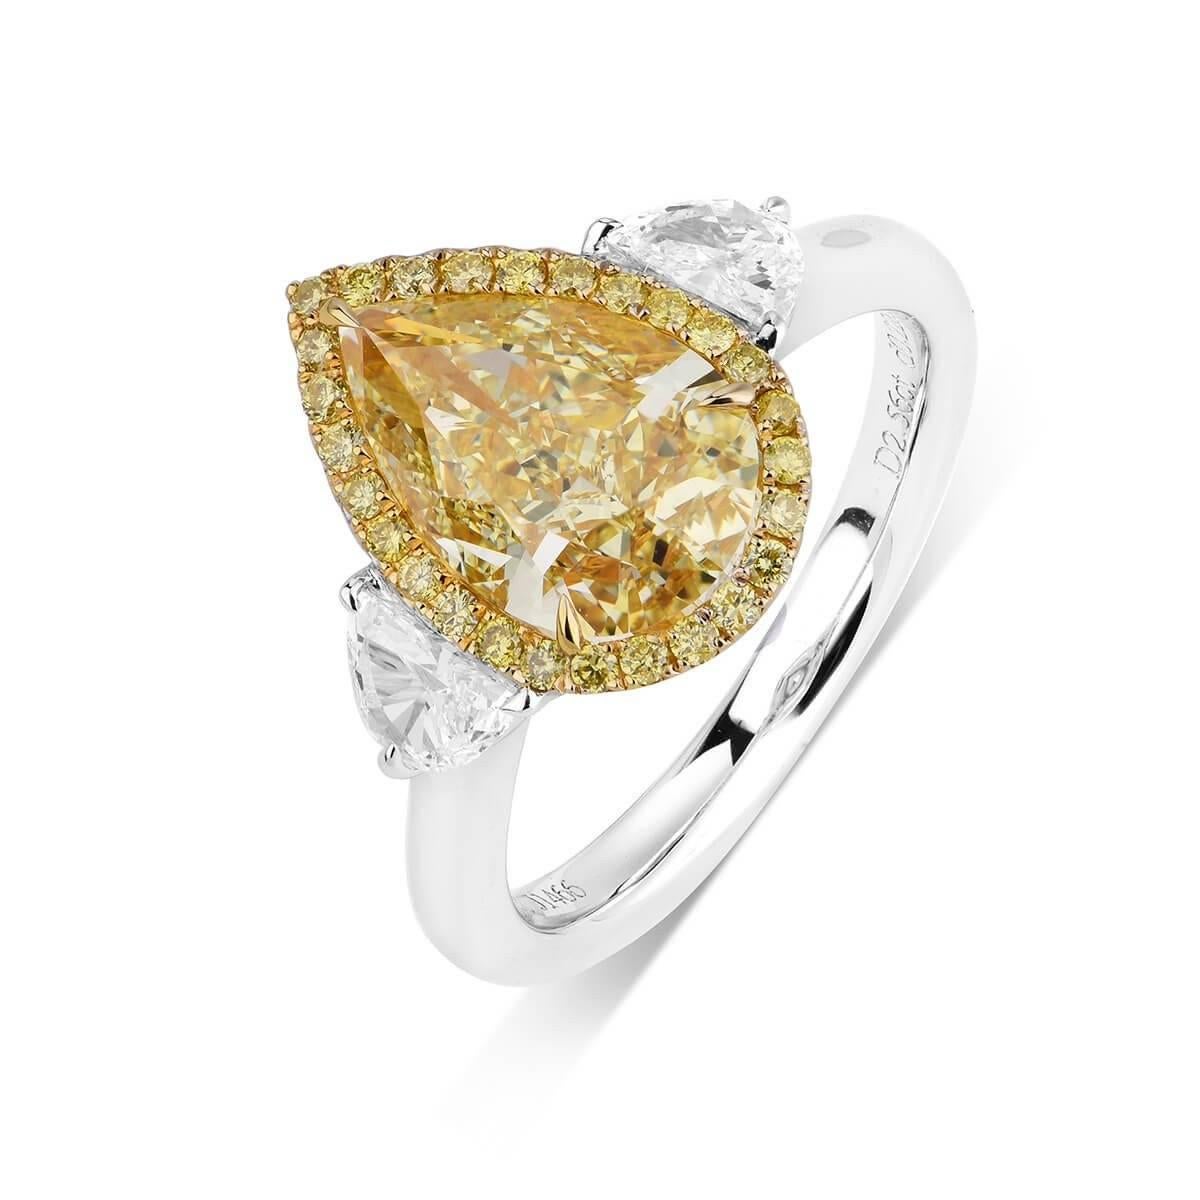 PEAR CUT DIAMOND RING - 3.17 CT


Set in 18K White gold


Total yellow diamond weight: 2.56 ct
[ 1 diamond ]
Color: W-X
Clarity: VS1

Total small fancy yellow diamond weight: 0.27 ct
[ 51 diamonds ]
Color: Fancy yellow
Clarity: VS

Total white